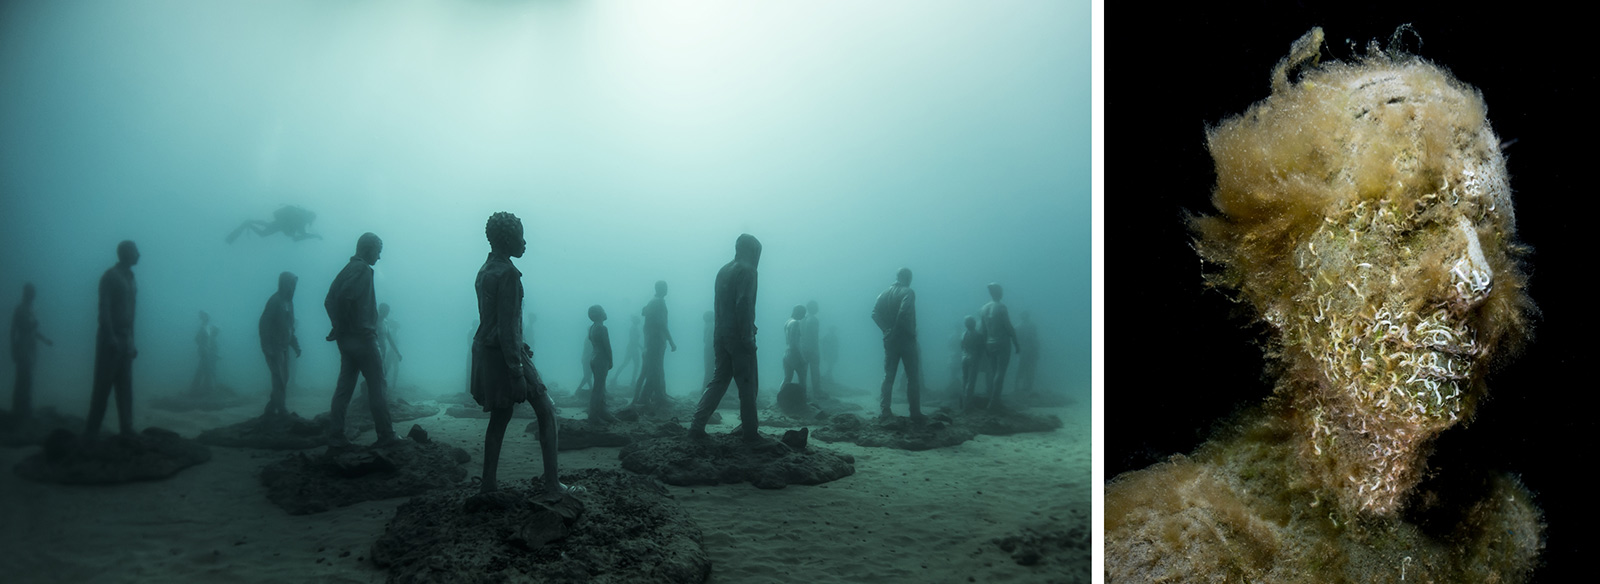 underwater sculptures of people walking